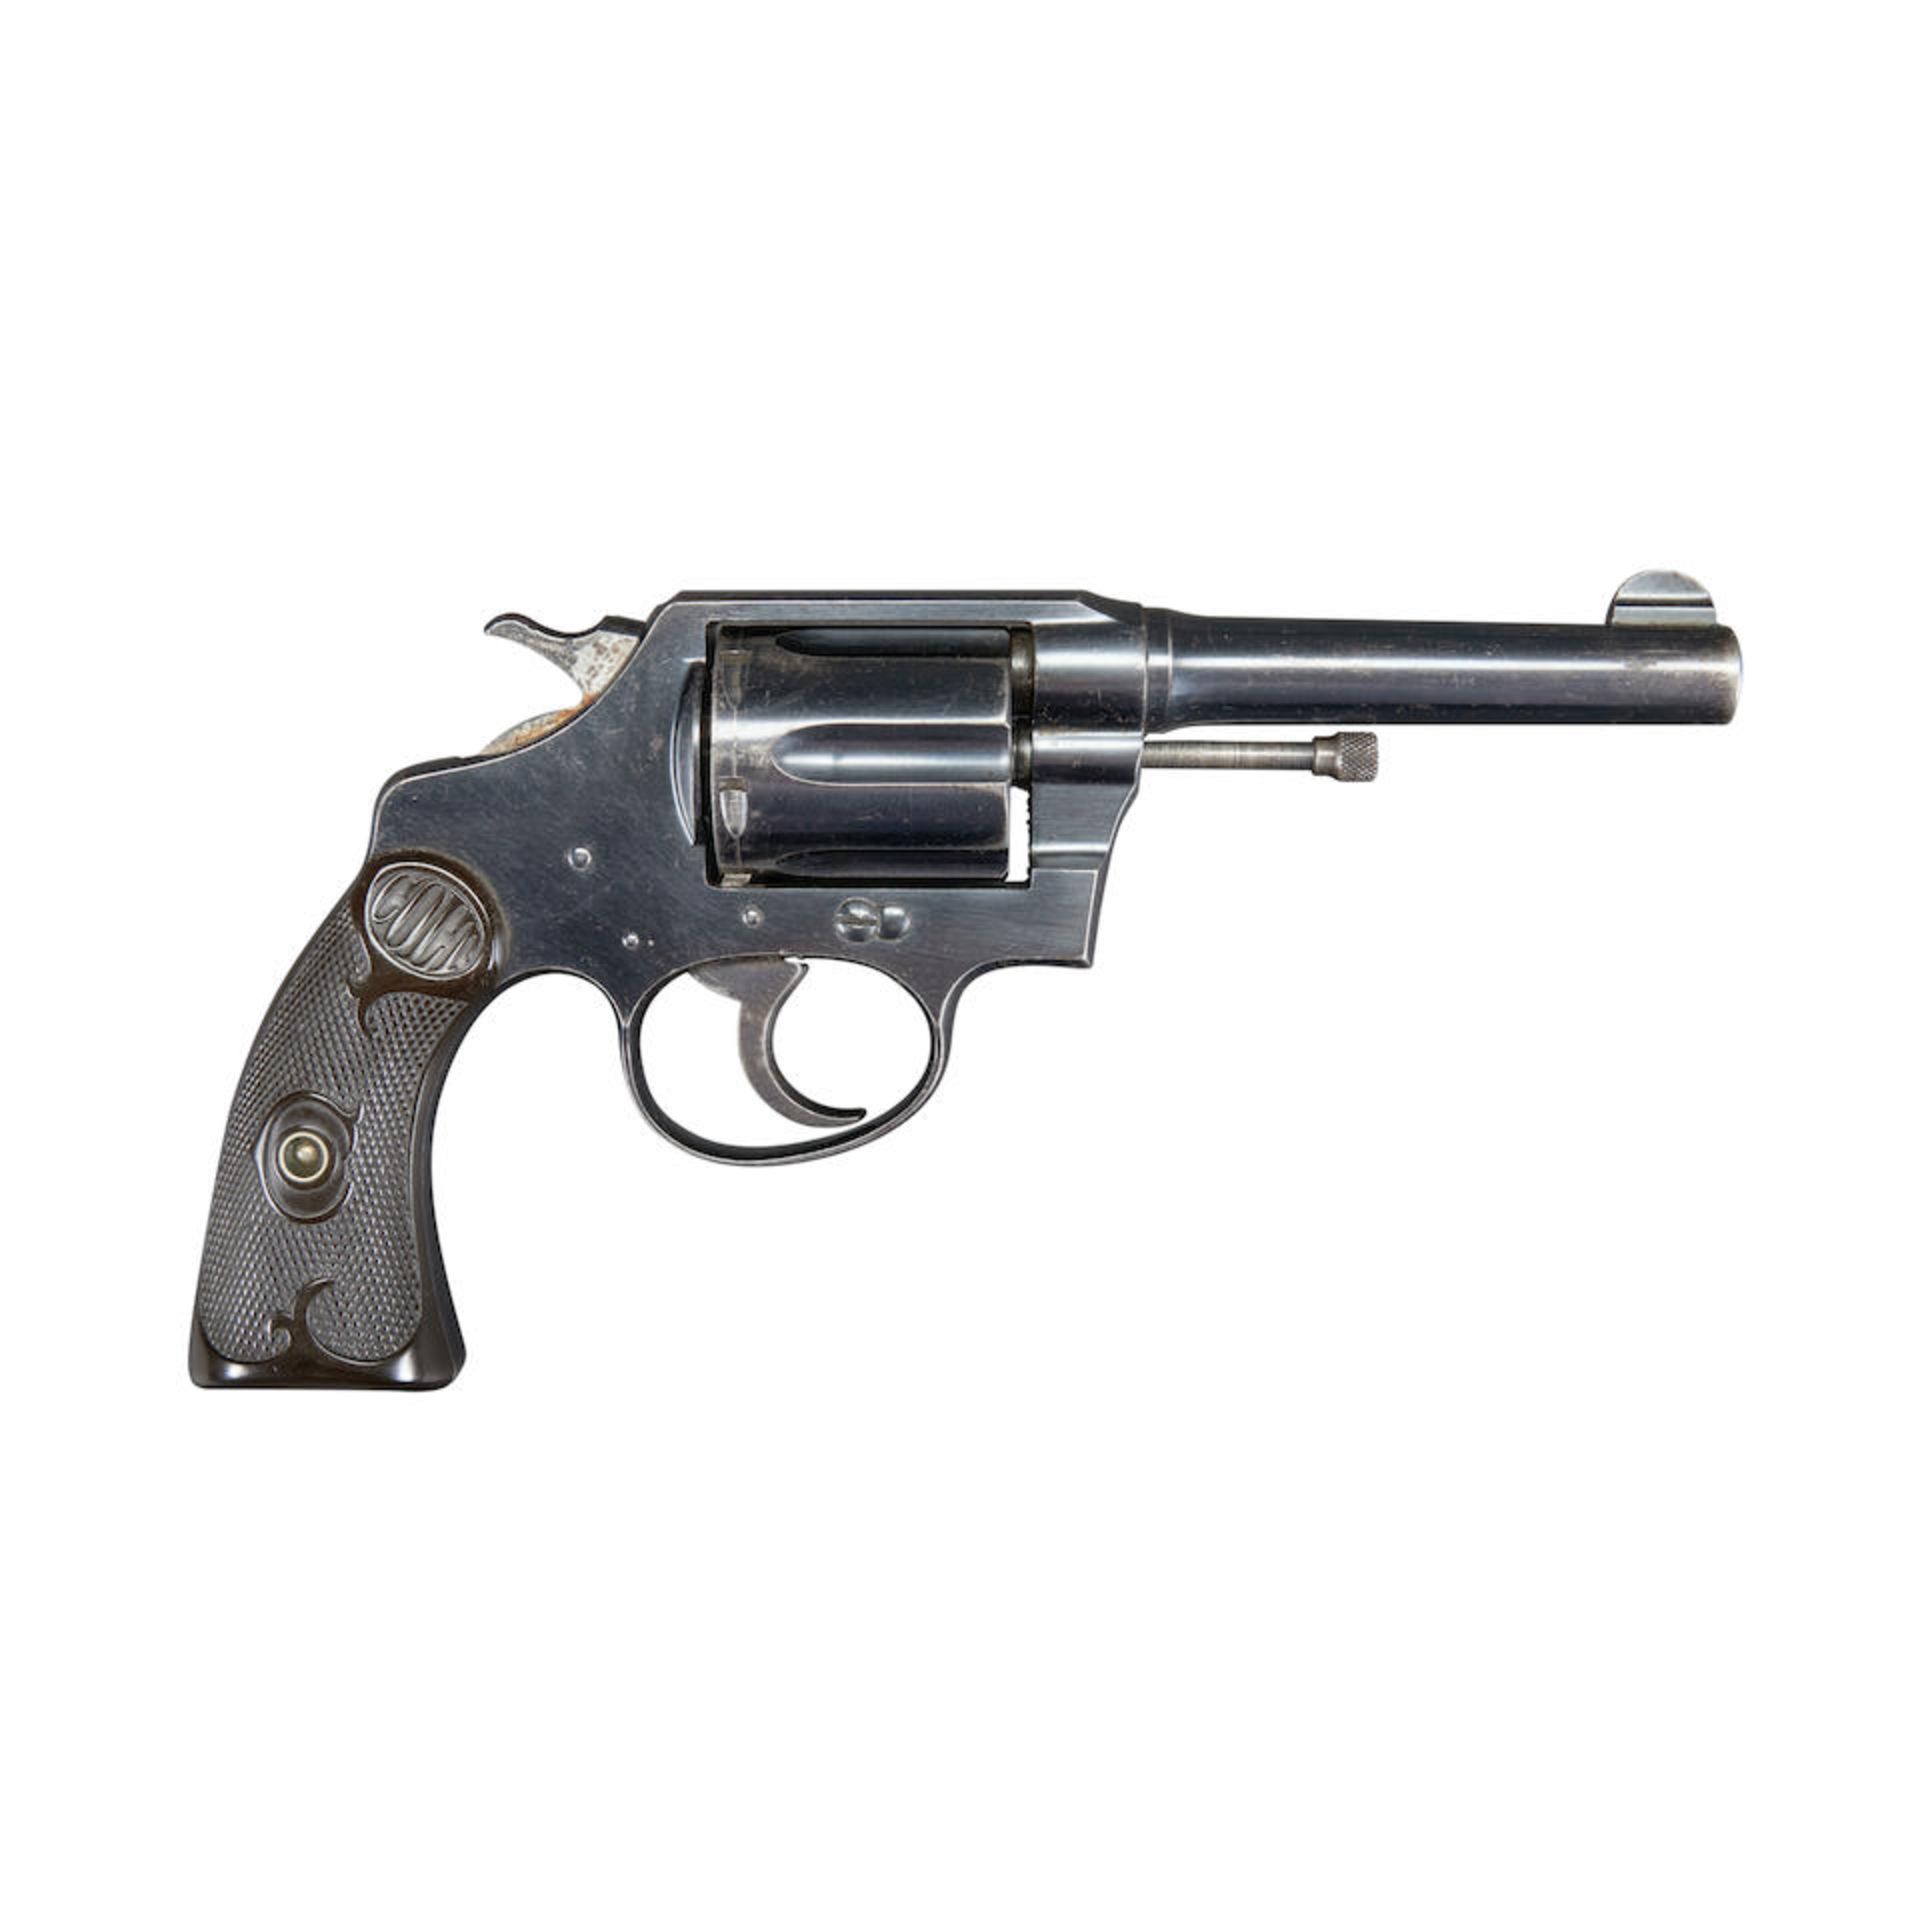 Colt Police Positive Special Double Action Revolver, Curio or Relic firearm